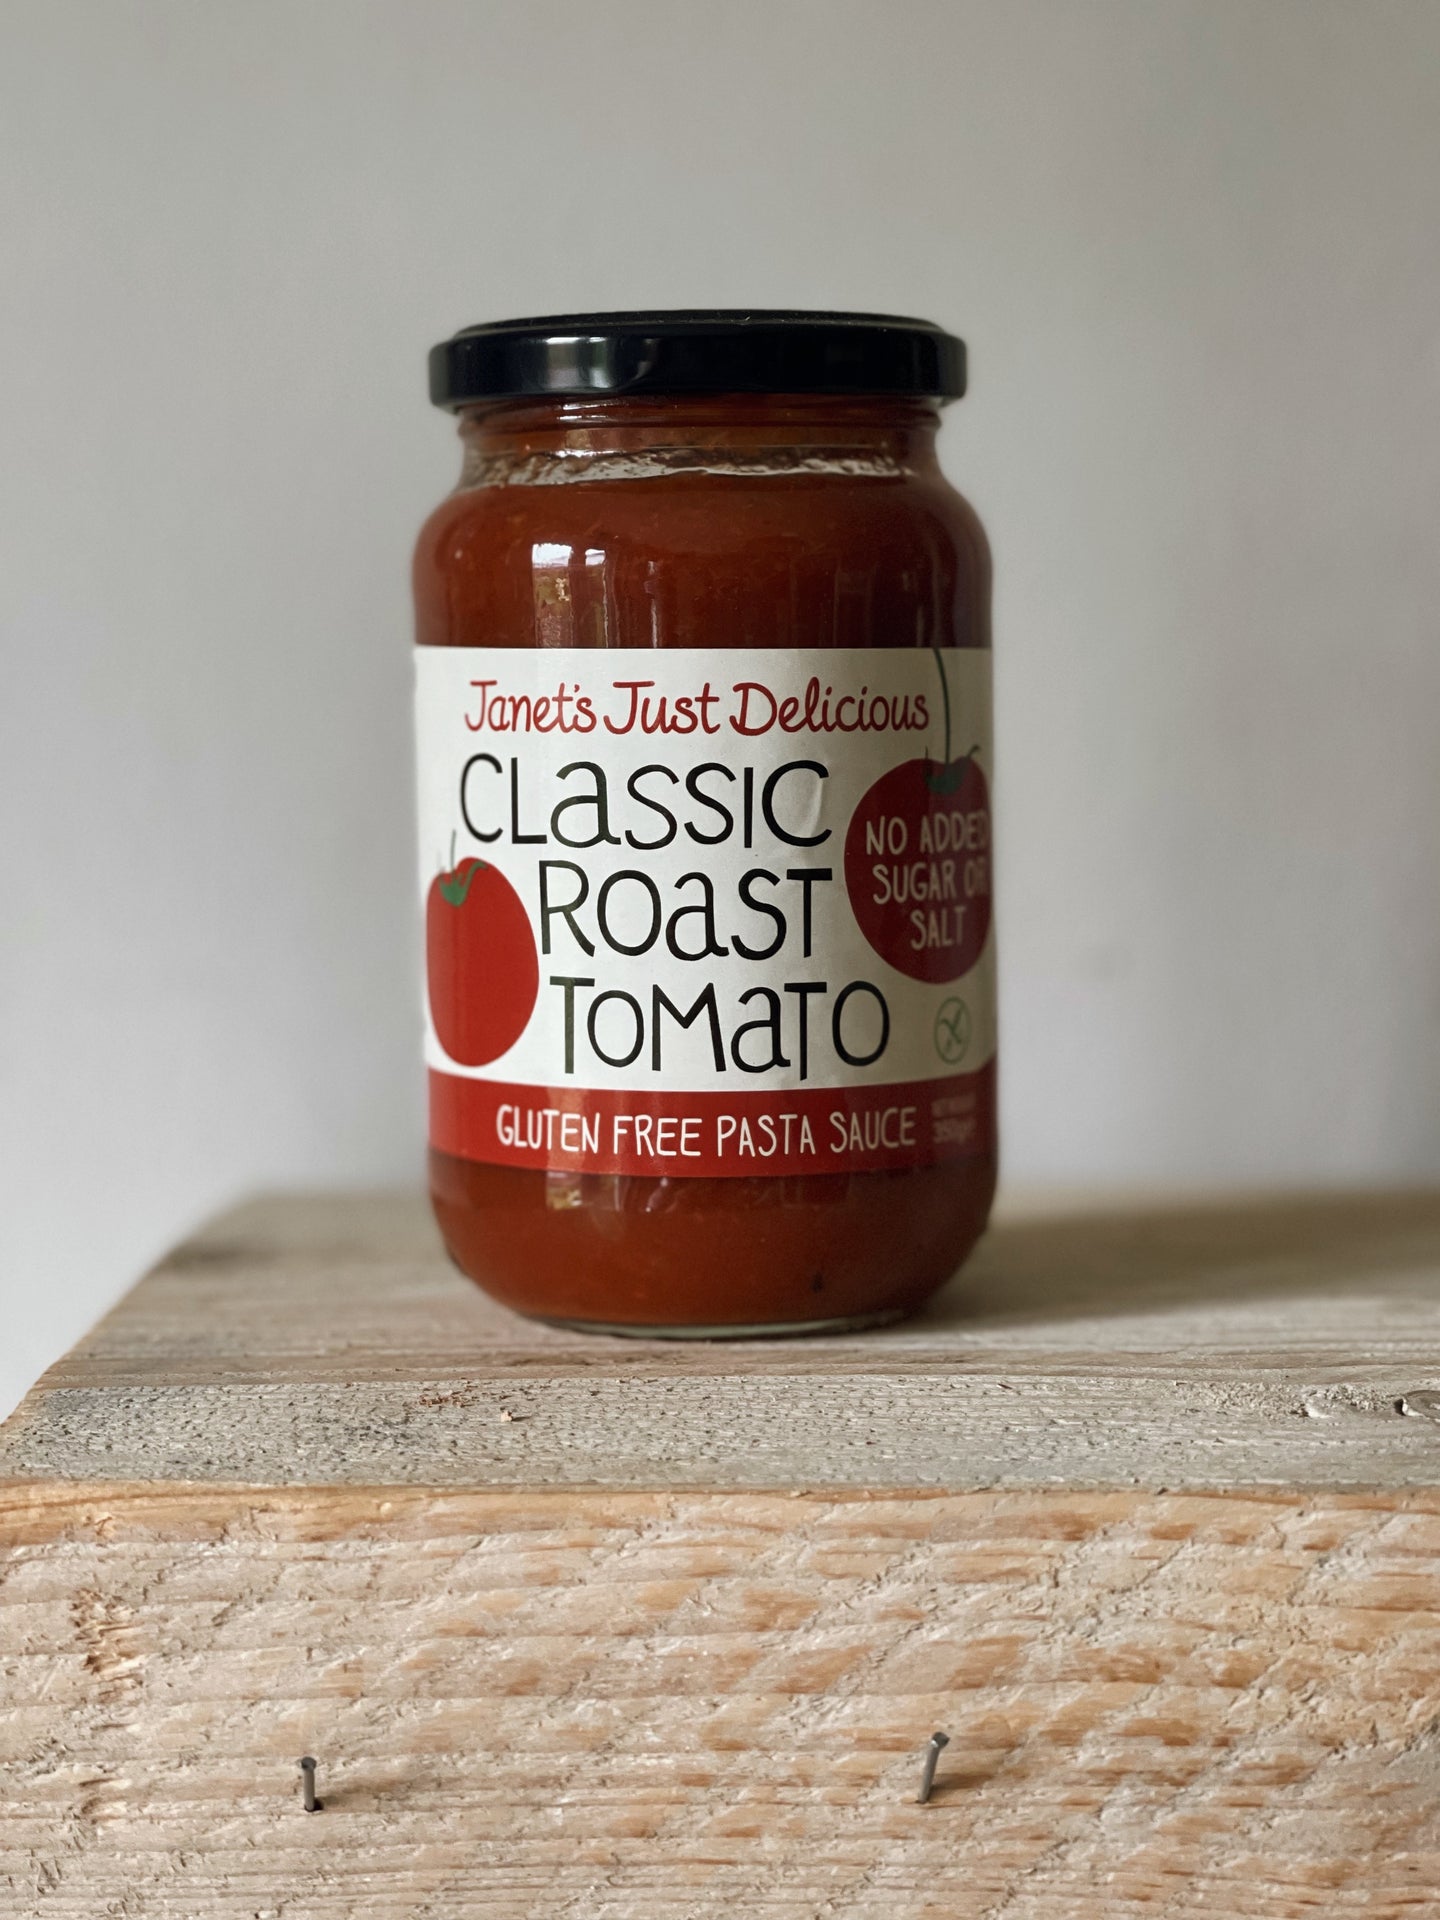 Classic roast tomato sauce